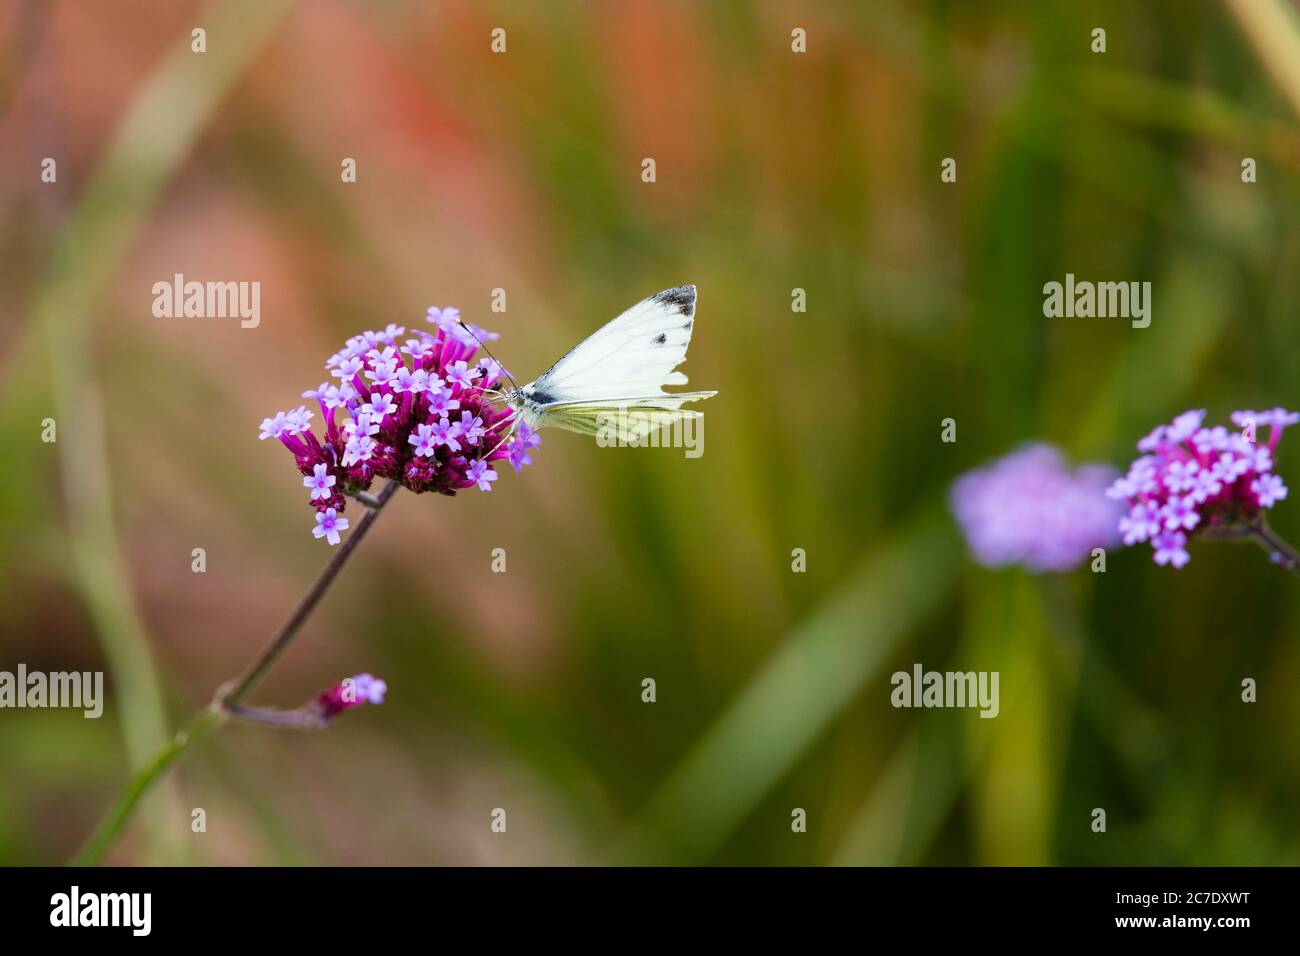 Small White butterfly, Pieris Rapae, feeding on purple Valerian flower plant. Stock Photo